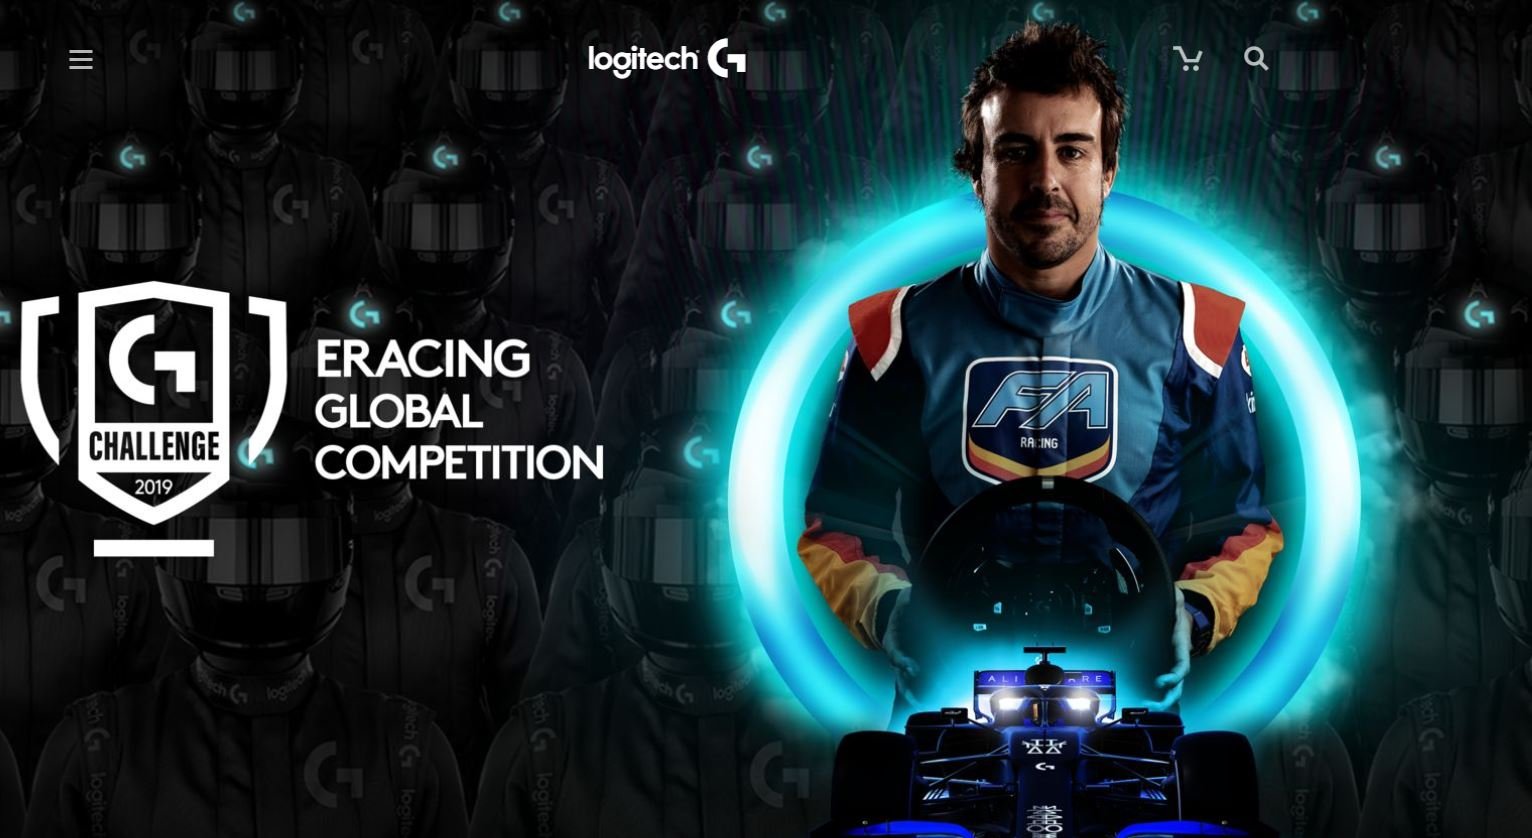 More information about "Via al Logitech G Challenge, obiettivo McLaren Shadow"